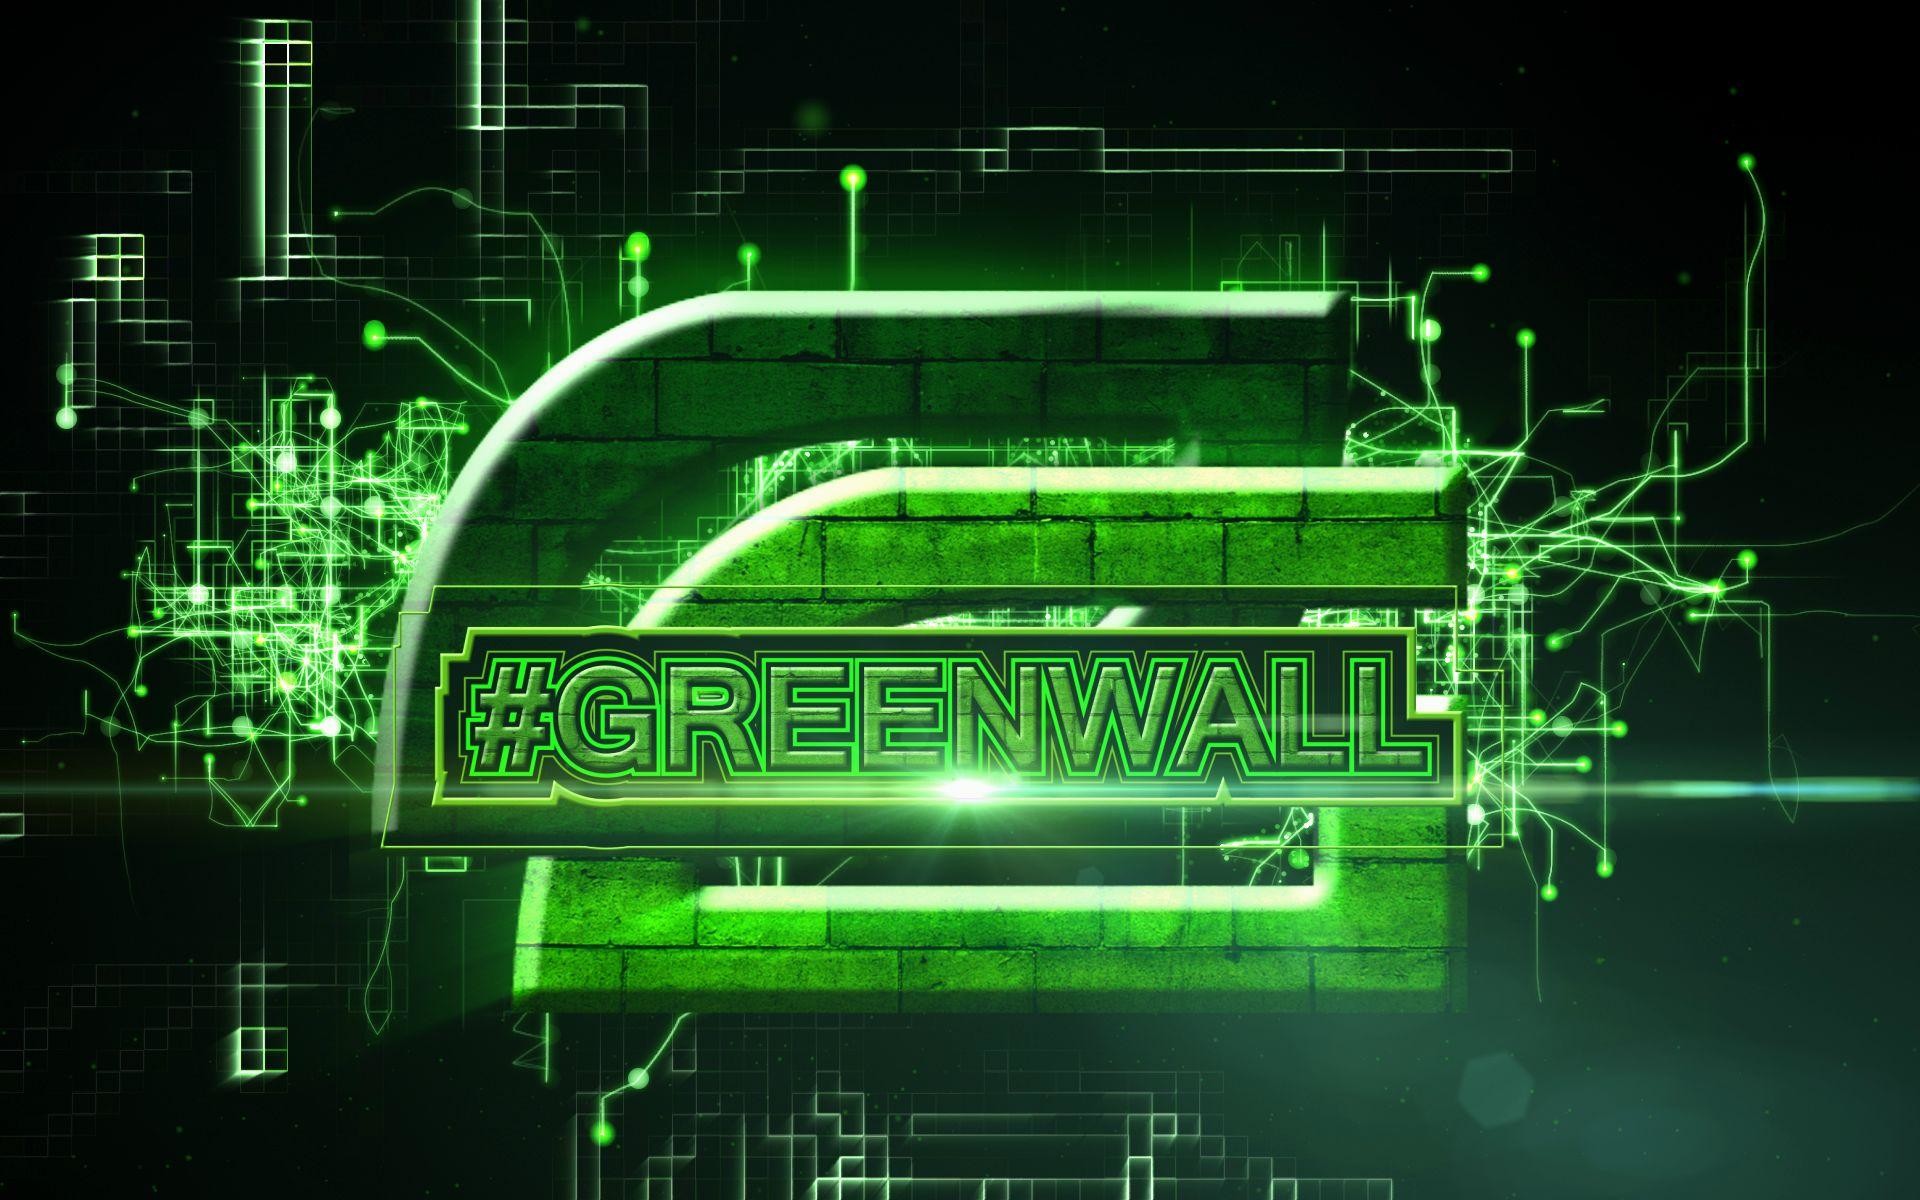 Wallpaper for opTic gaming organisation GREENWAL